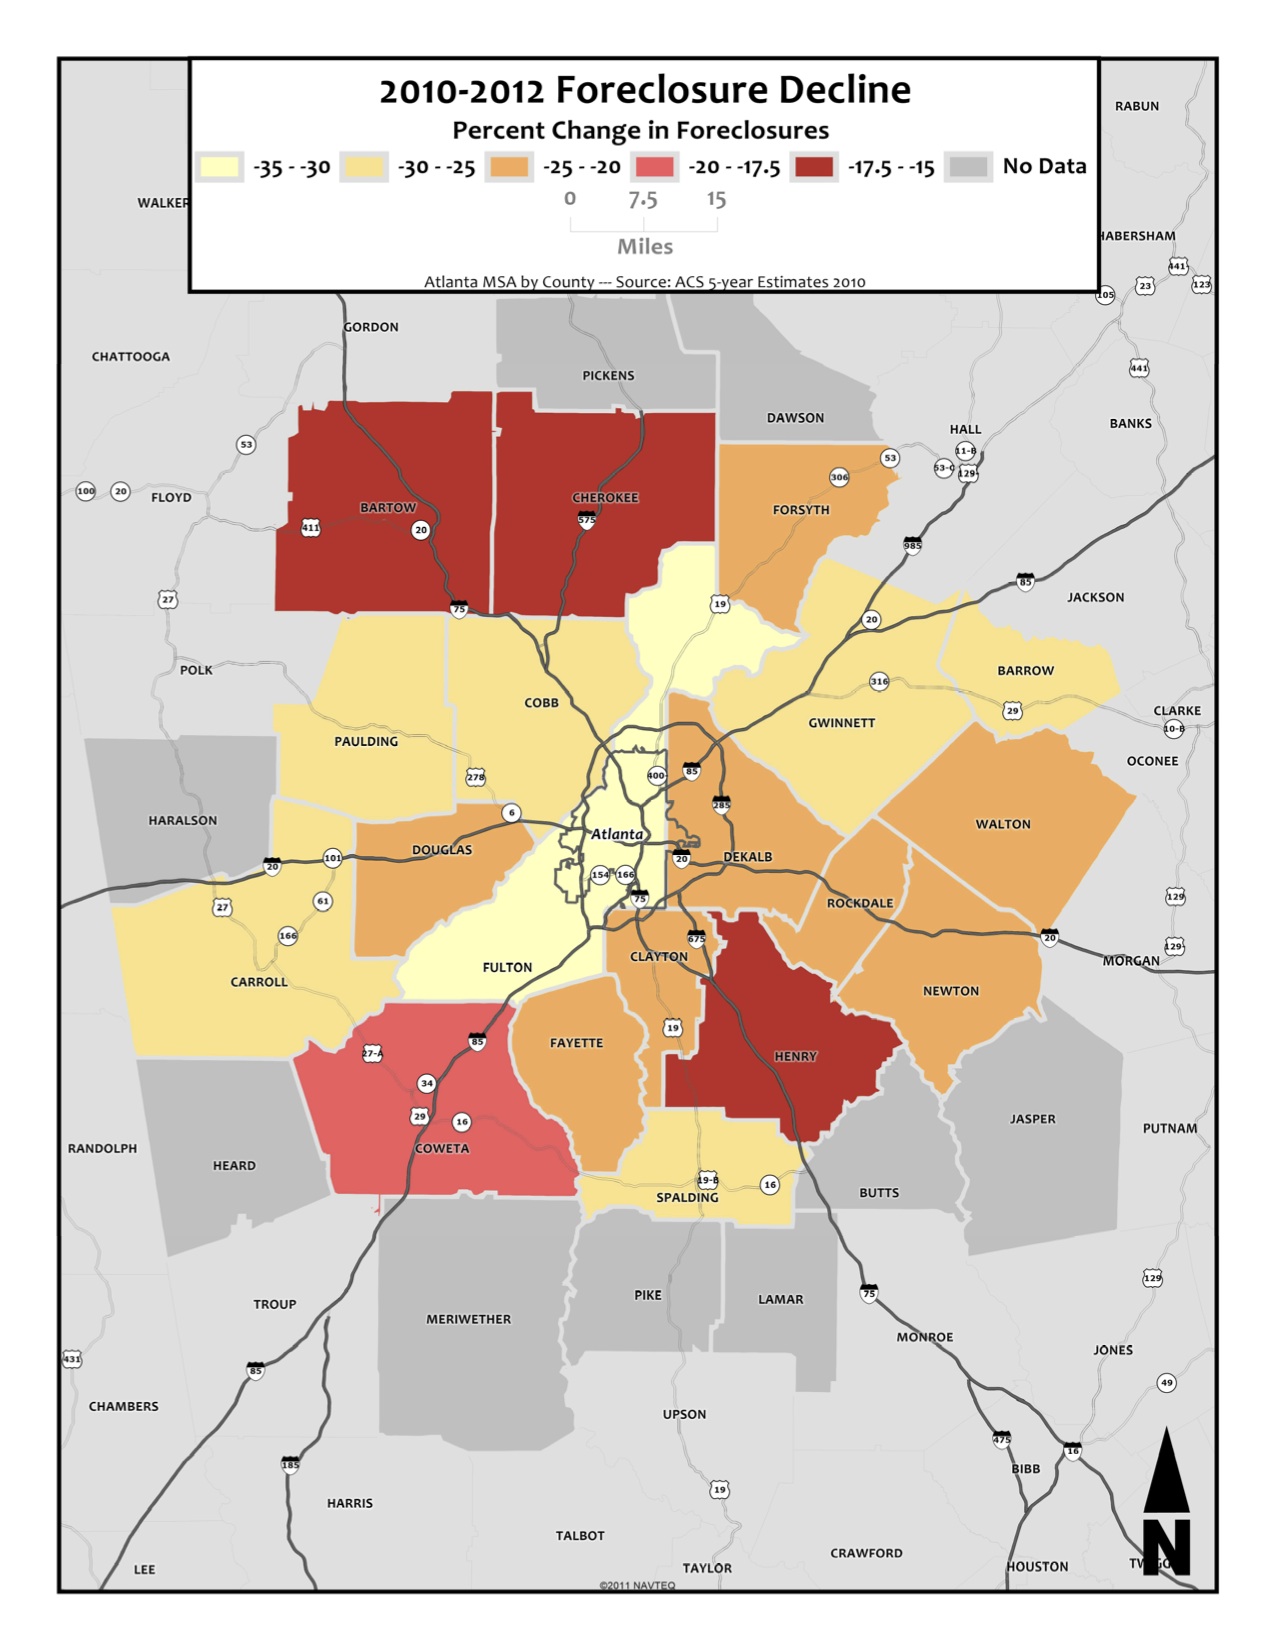 Foreclosure Change, 2010-2012 – metro counties